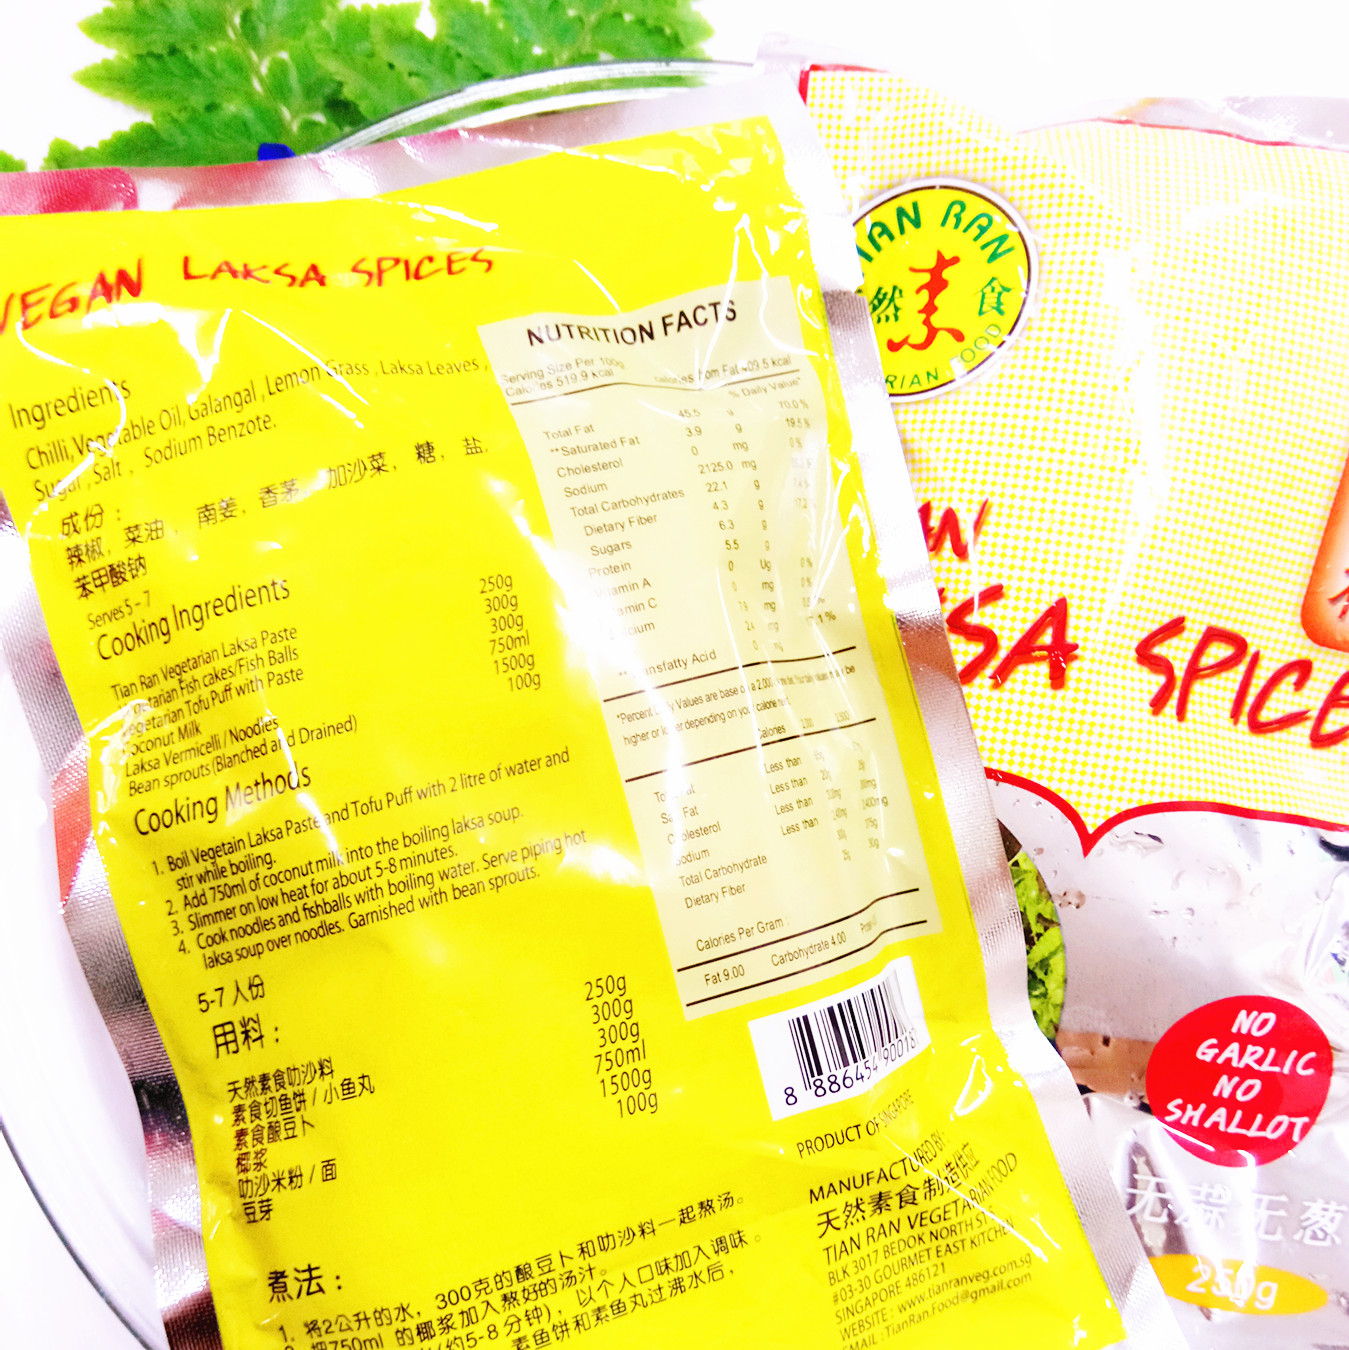 Image Tianran Vegan Premixed Laksa (Paste) Spices 天然-素叻沙料 250grams